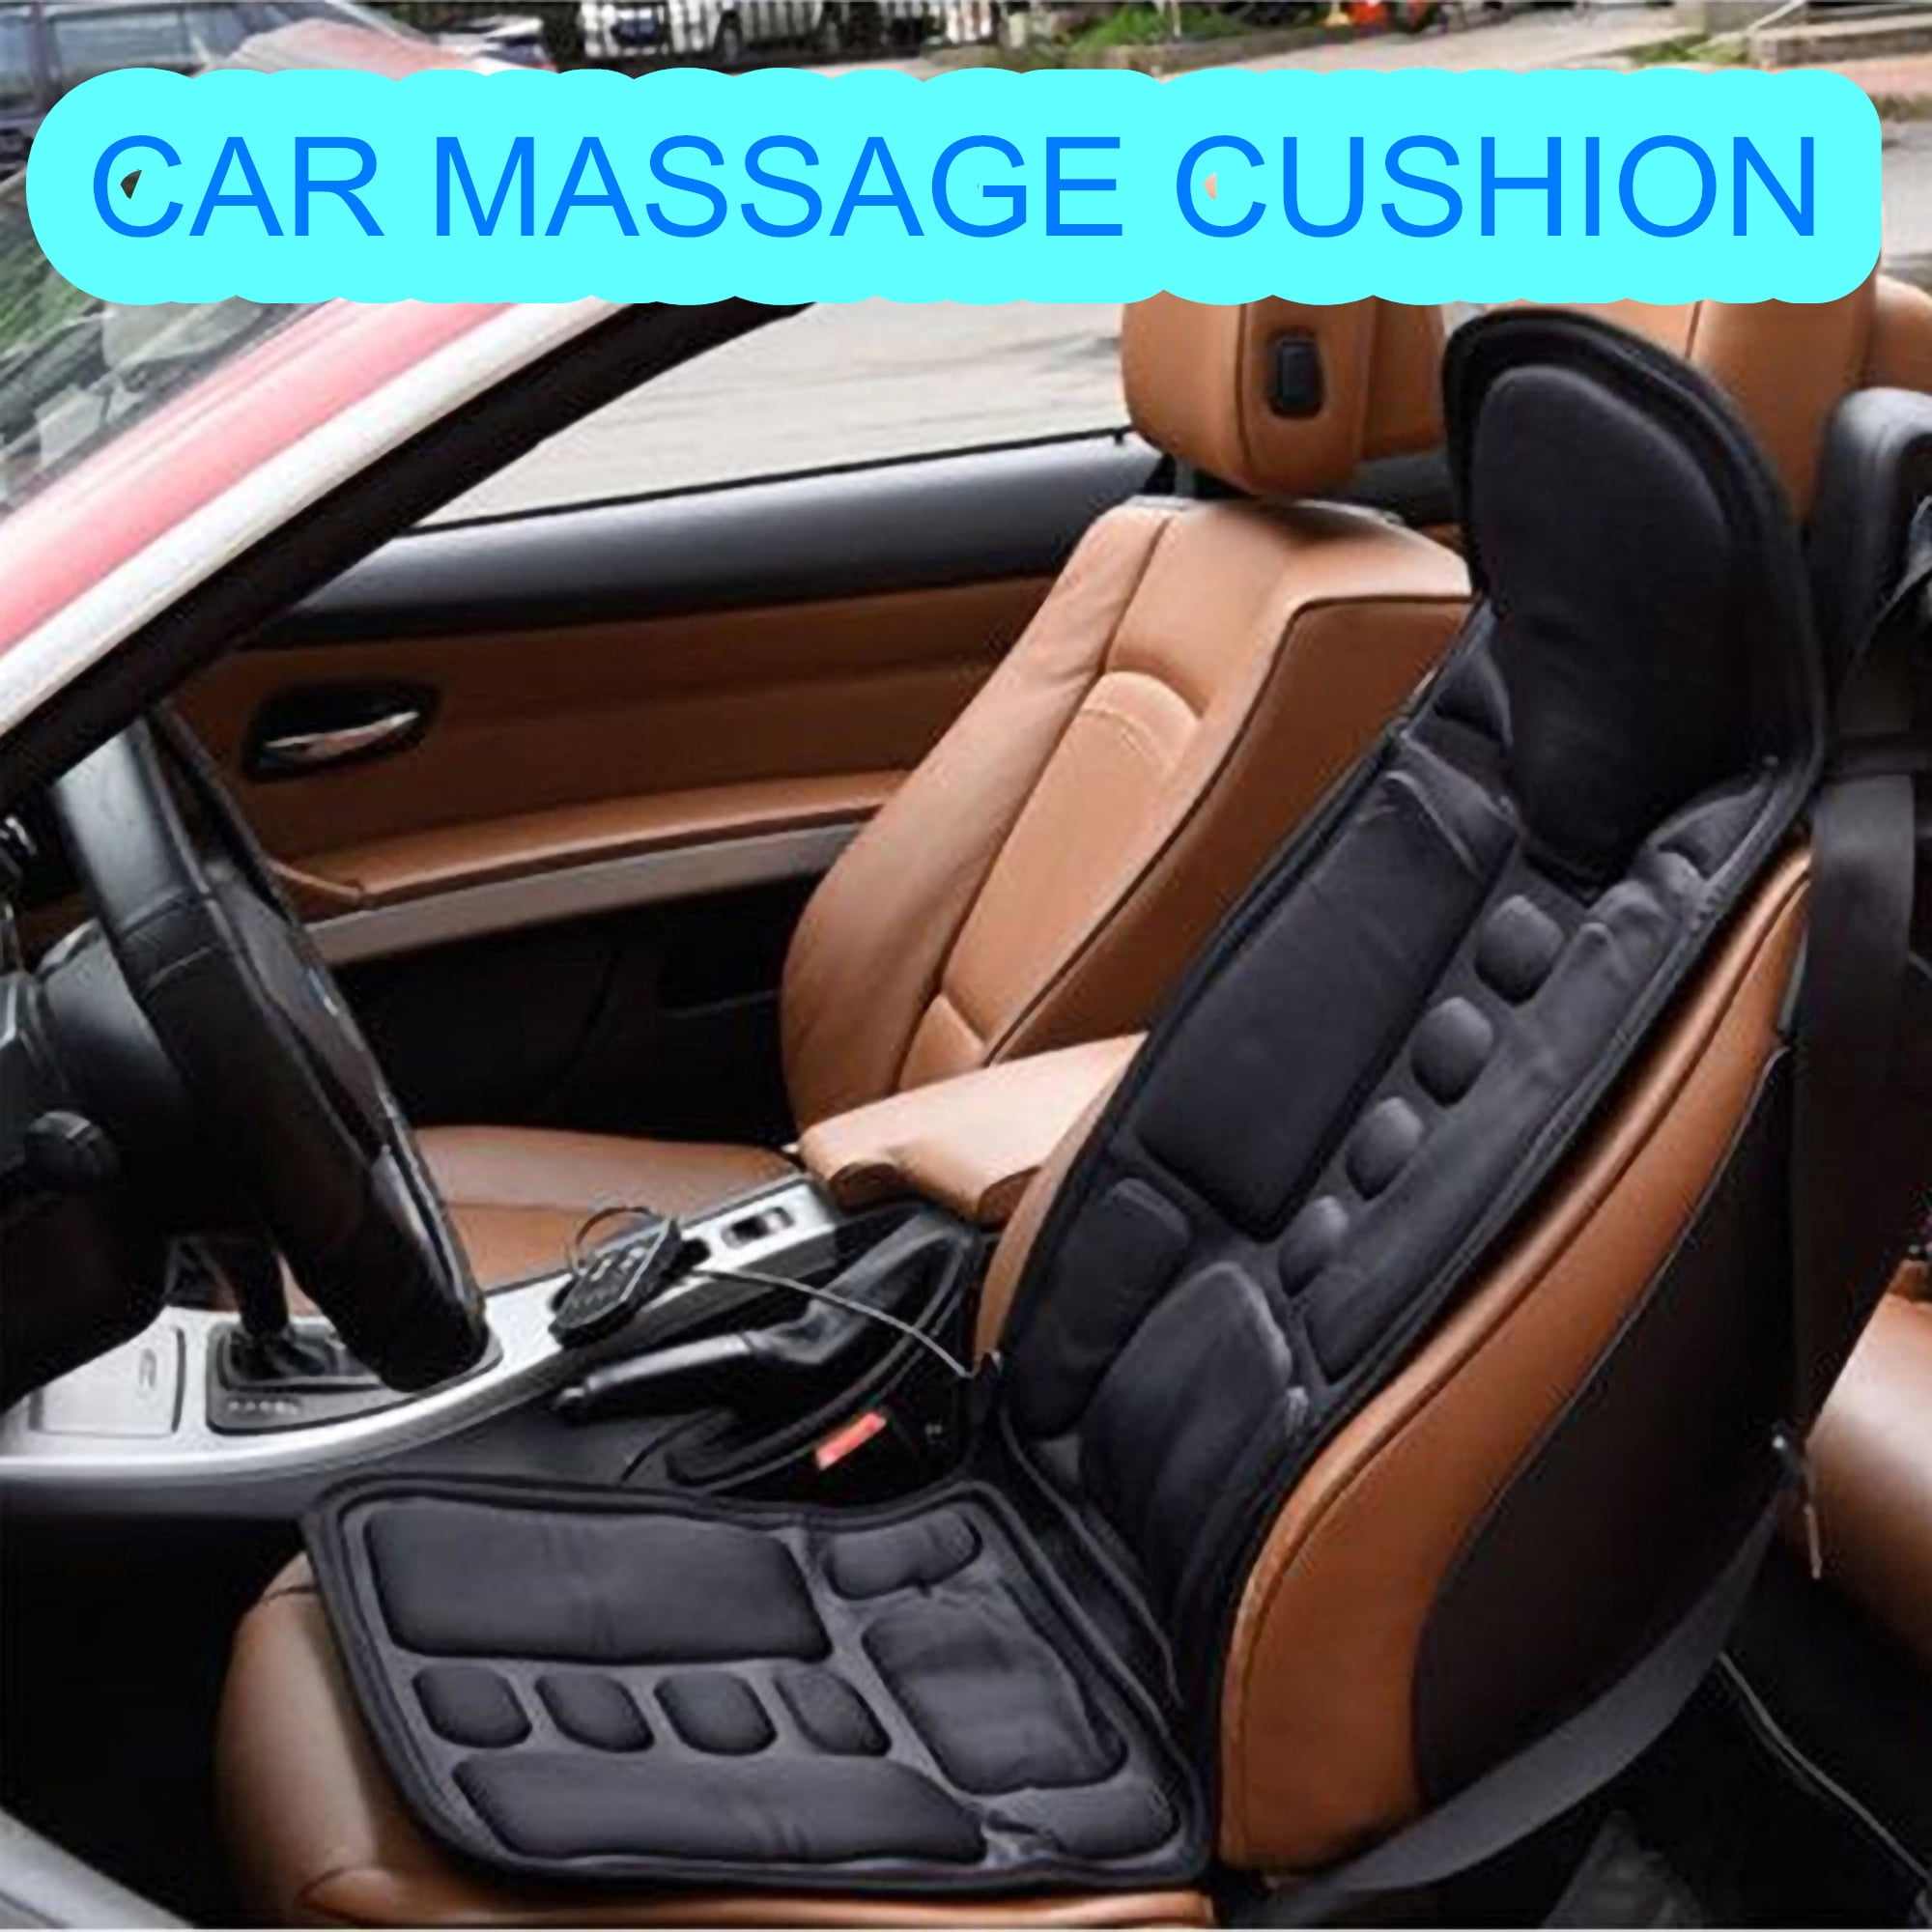 Massage car